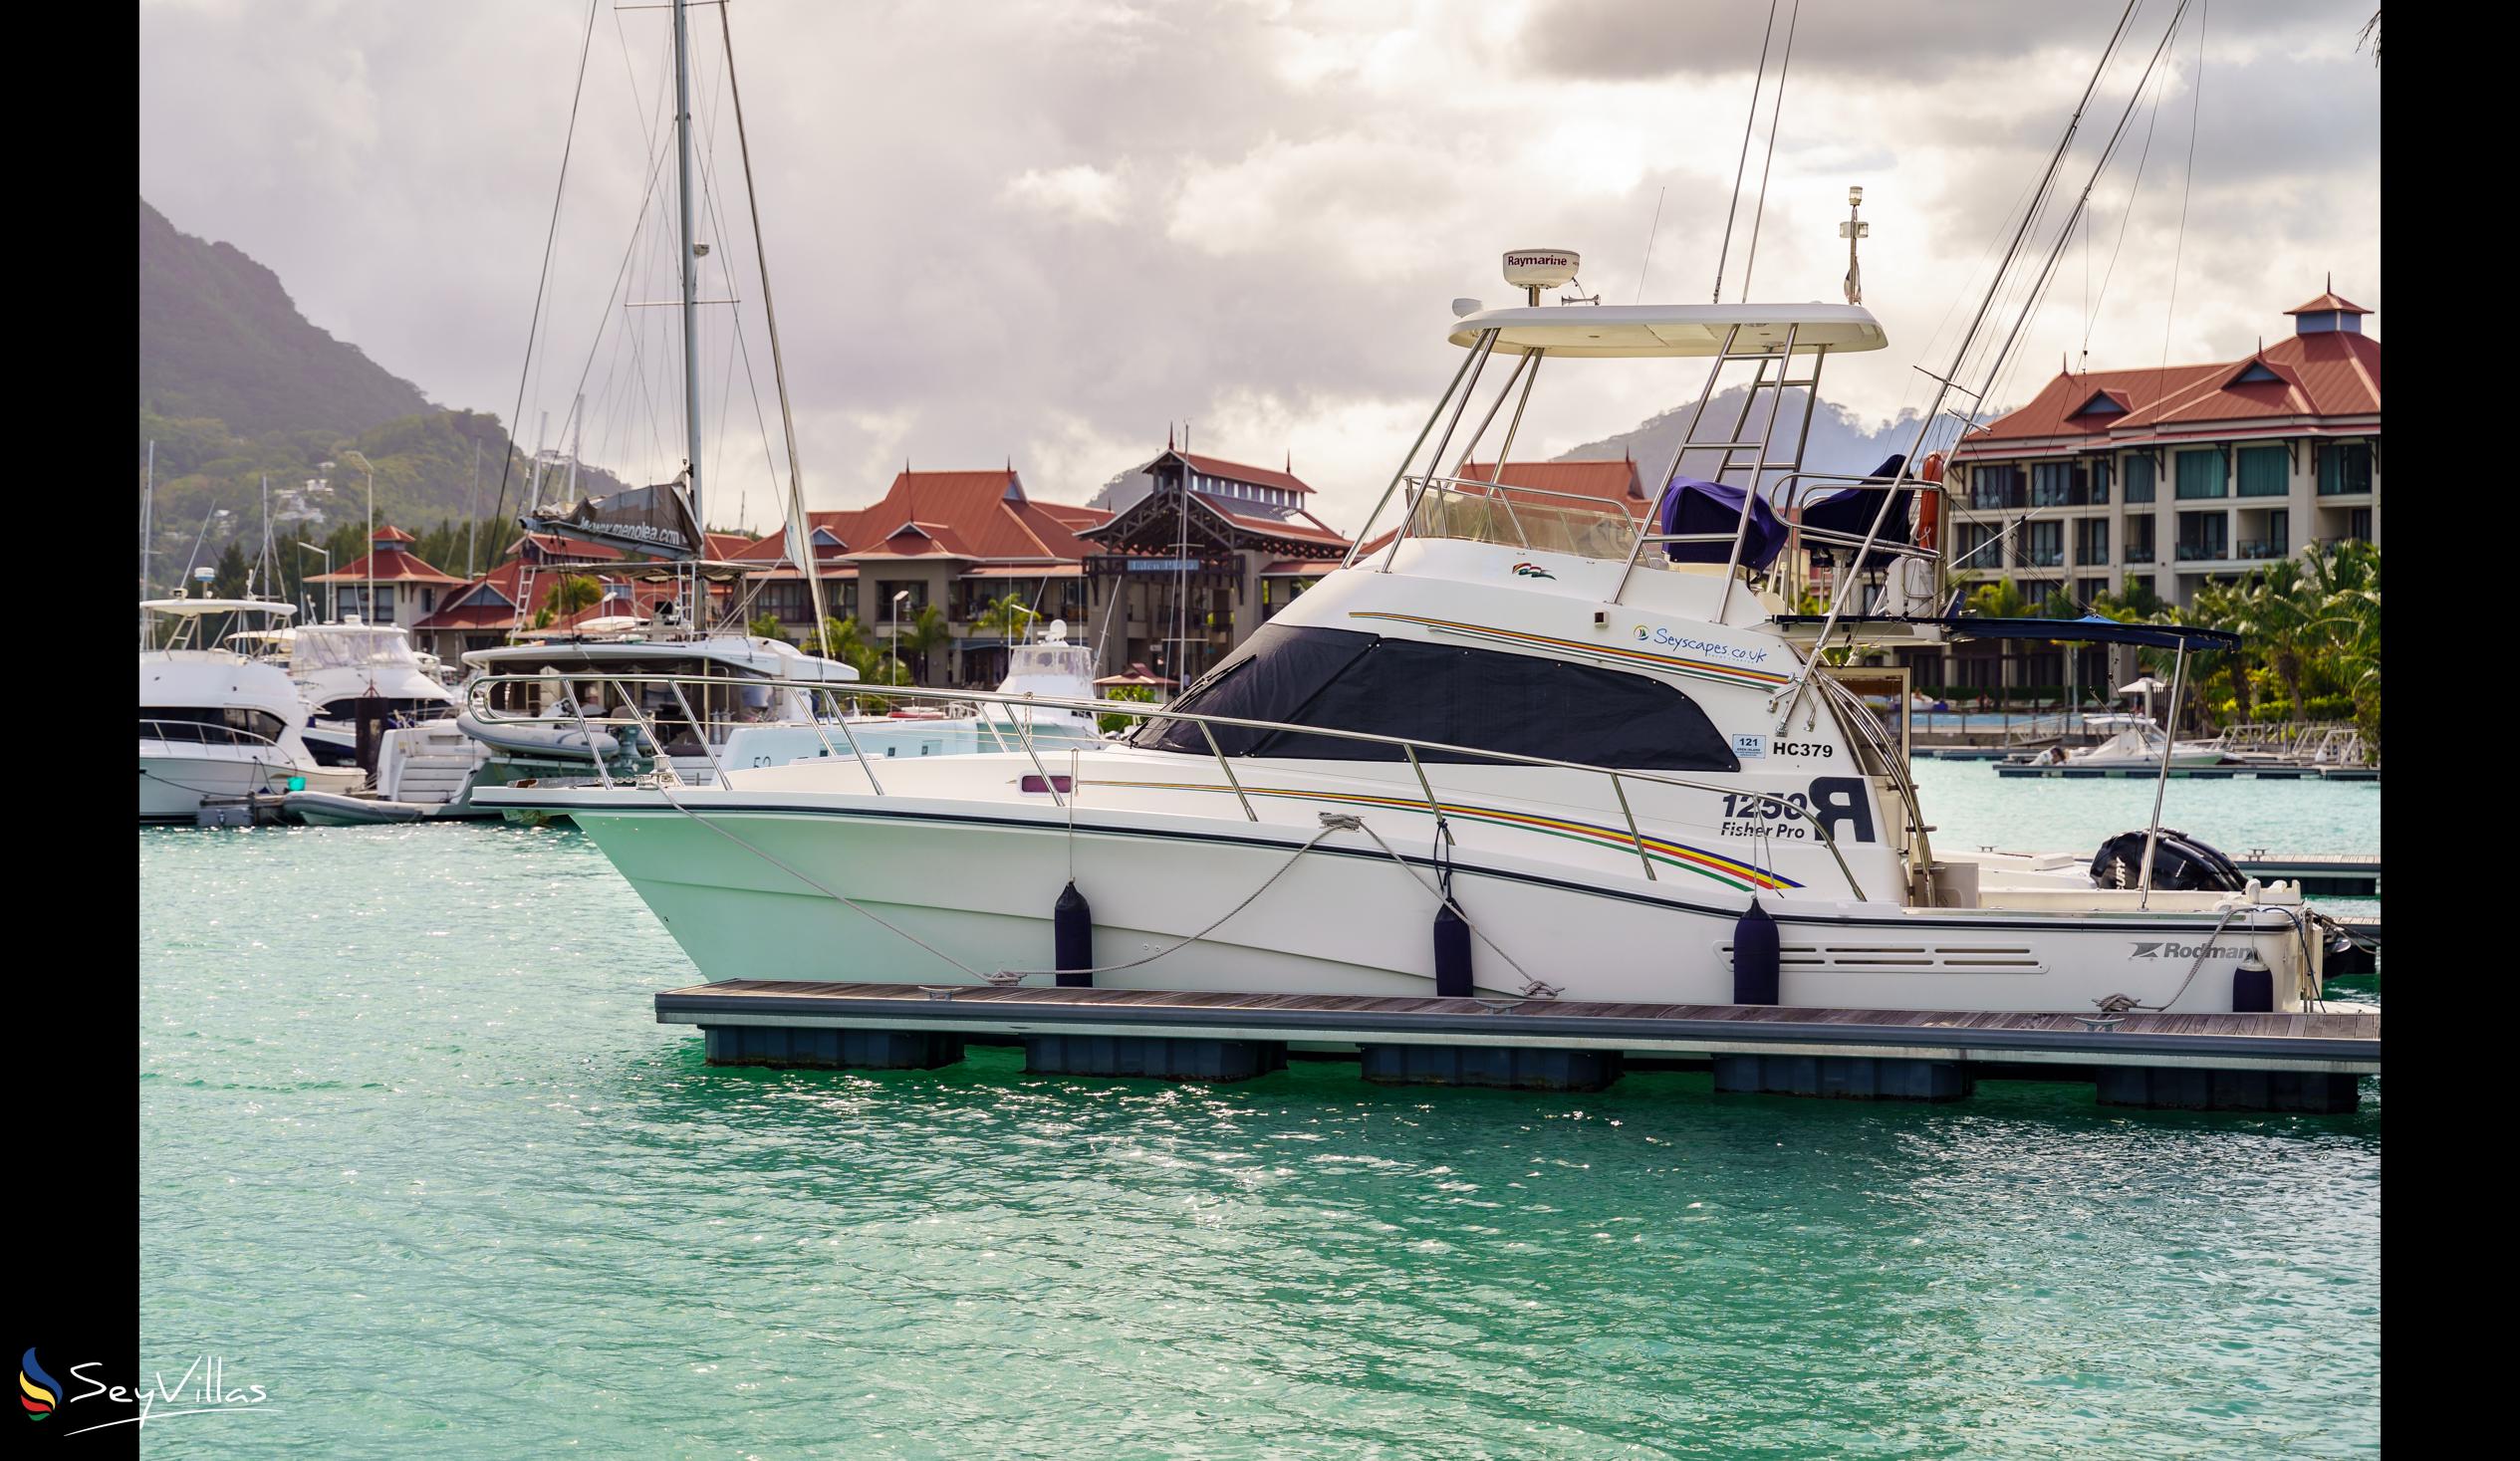 Foto 9: Seyscapes Yacht Charter - Aussenbereich - Seychellen (Seychellen)